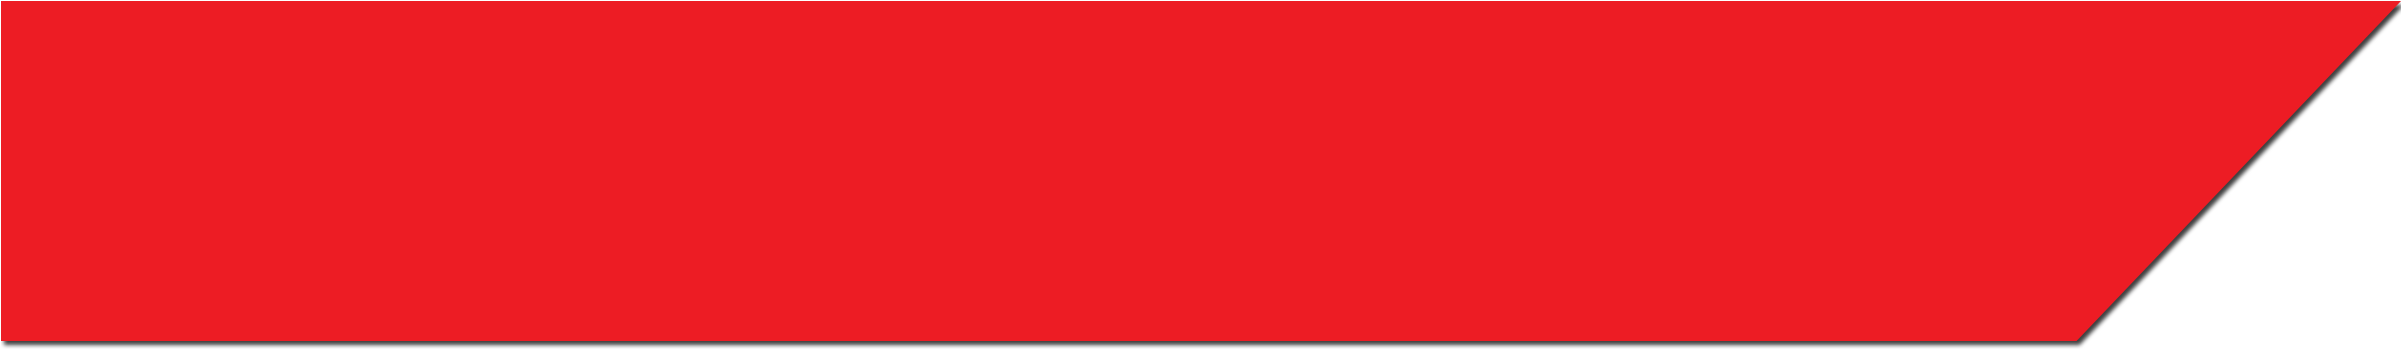 Free Red Scroll Banner - Carmine (2400x600)